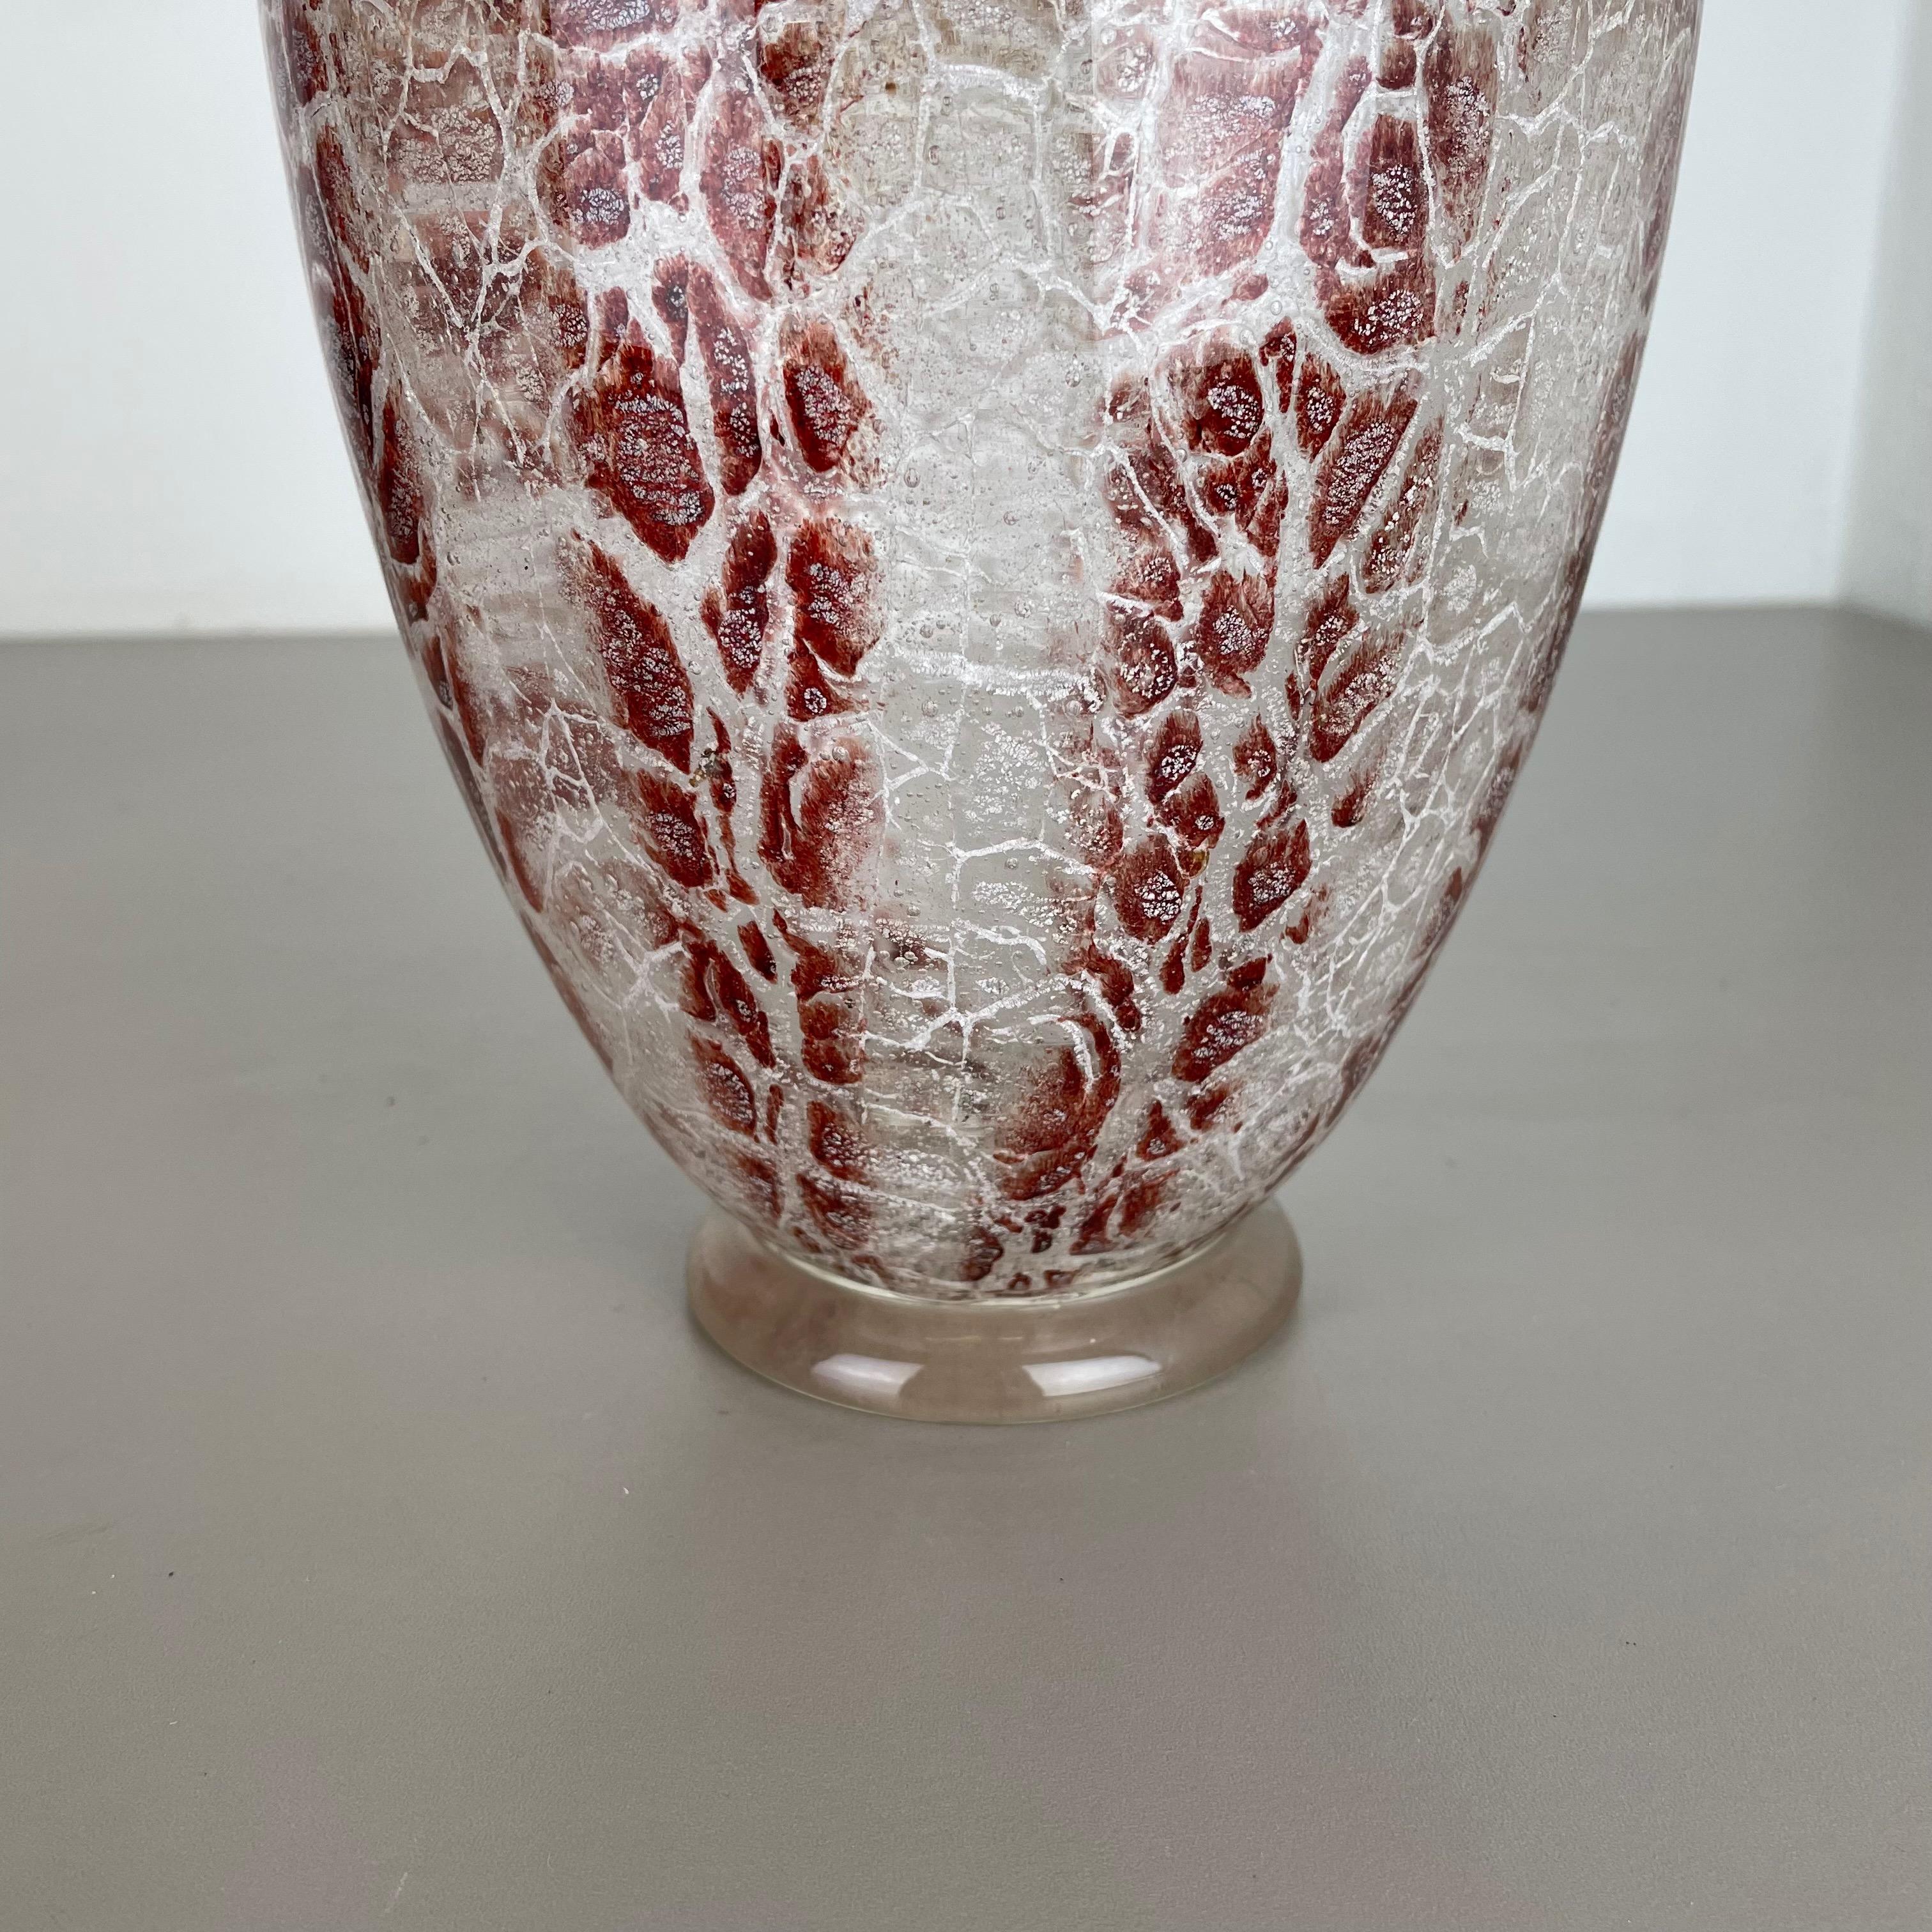 Ikora Glass Vase 2, 3kg by Karl Wiedmann for WMF Germany, 1930s Bauhaus Art Deco For Sale 7